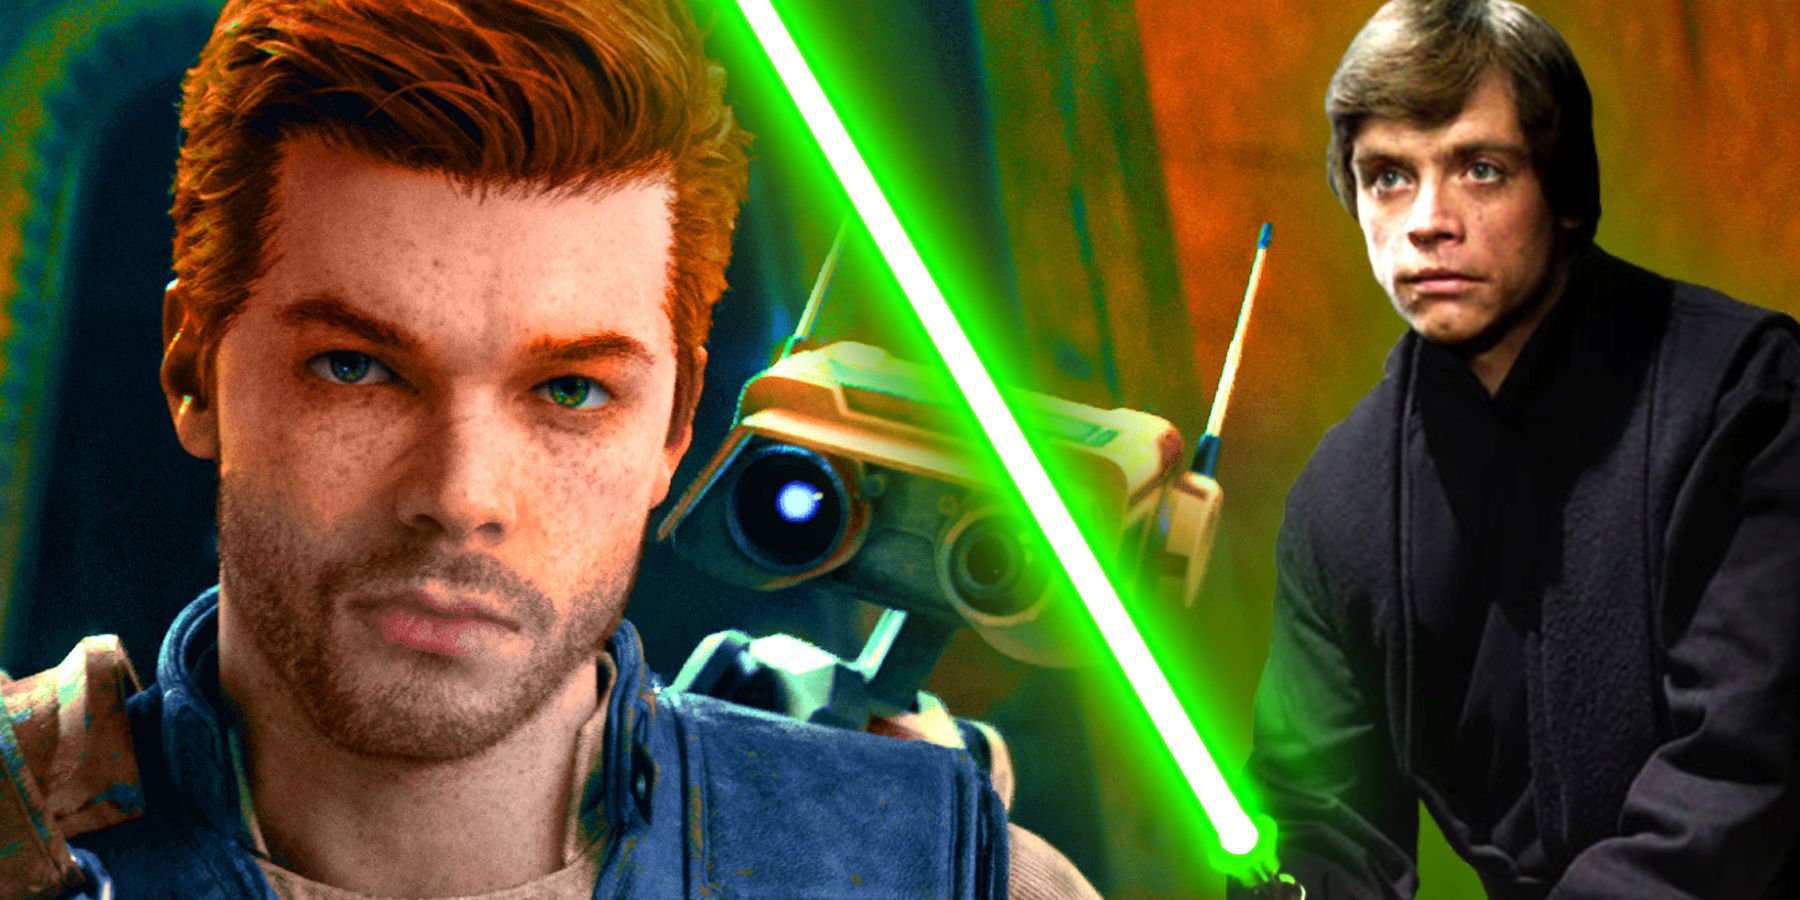 Cal Kestis as seen in game Star Wars- Jedi: Survivor and Luke Skywalker from Star Wars: Return of the Jedi